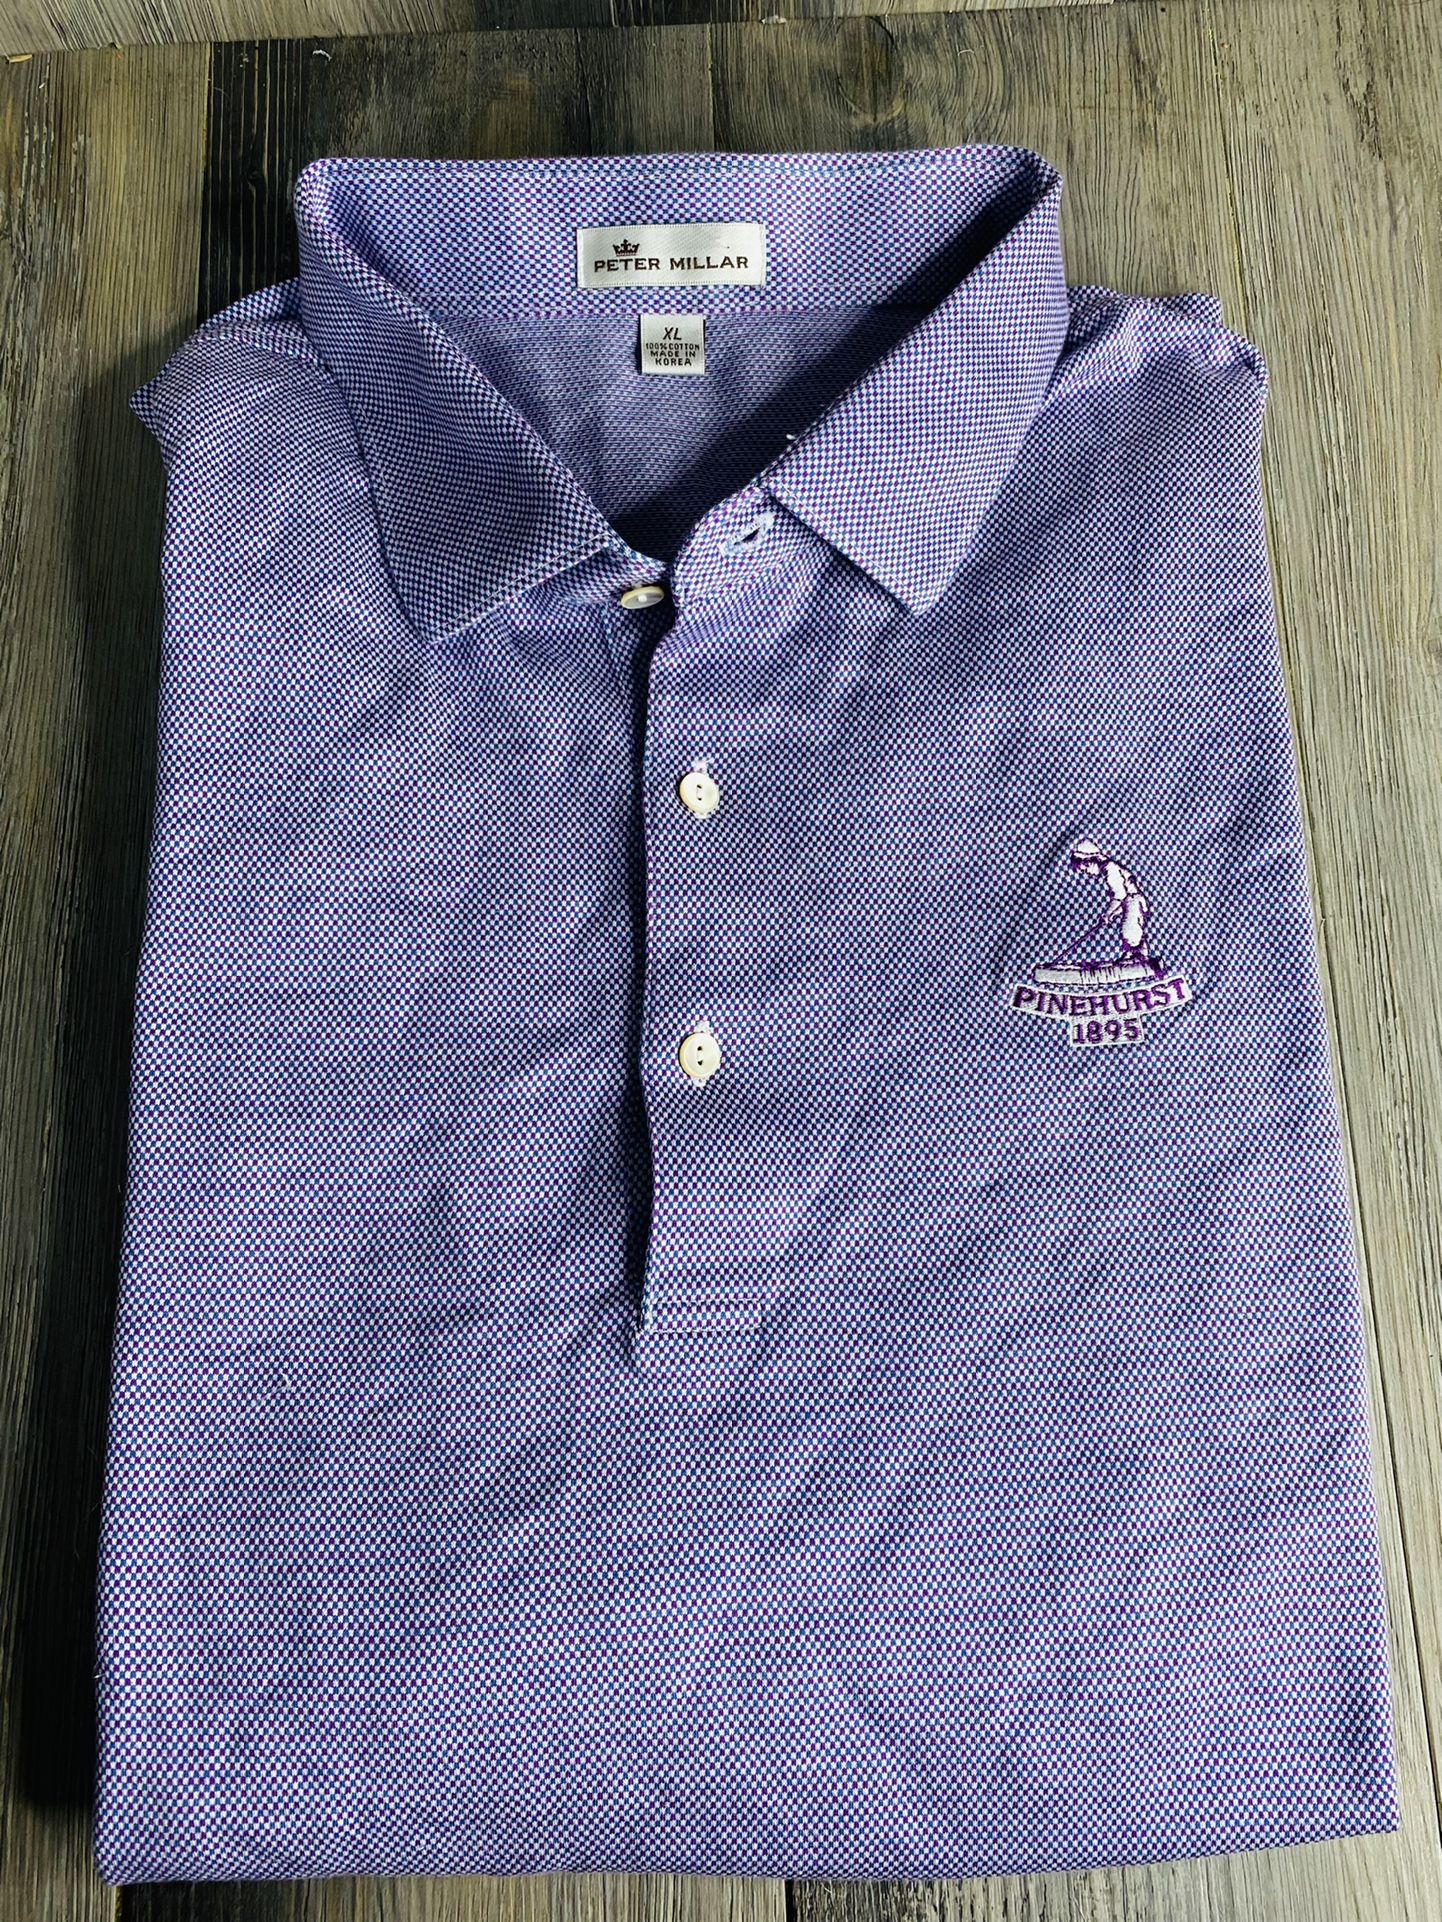 Peter Millar Men's XL Short Sleeve Golf Polo Shirt Blue Pinehurst 1895